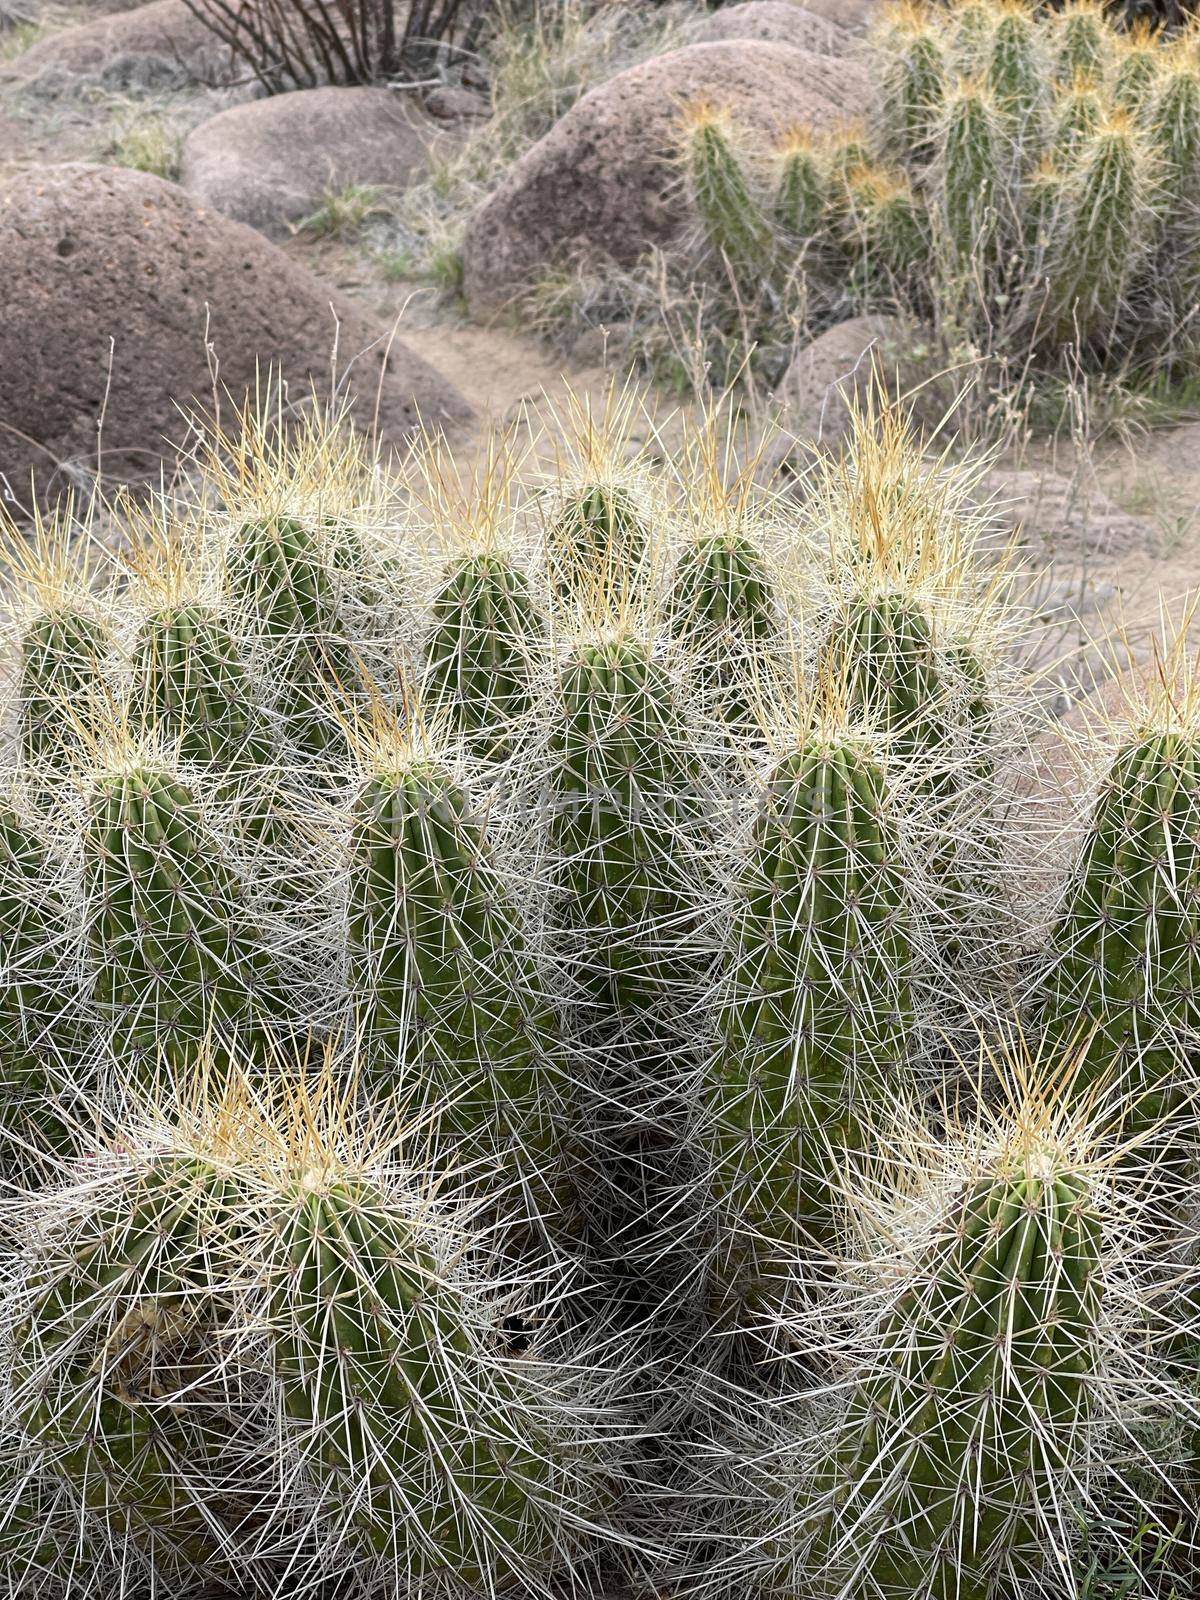 Prickly Organ Pipe Cactus by lisaldw